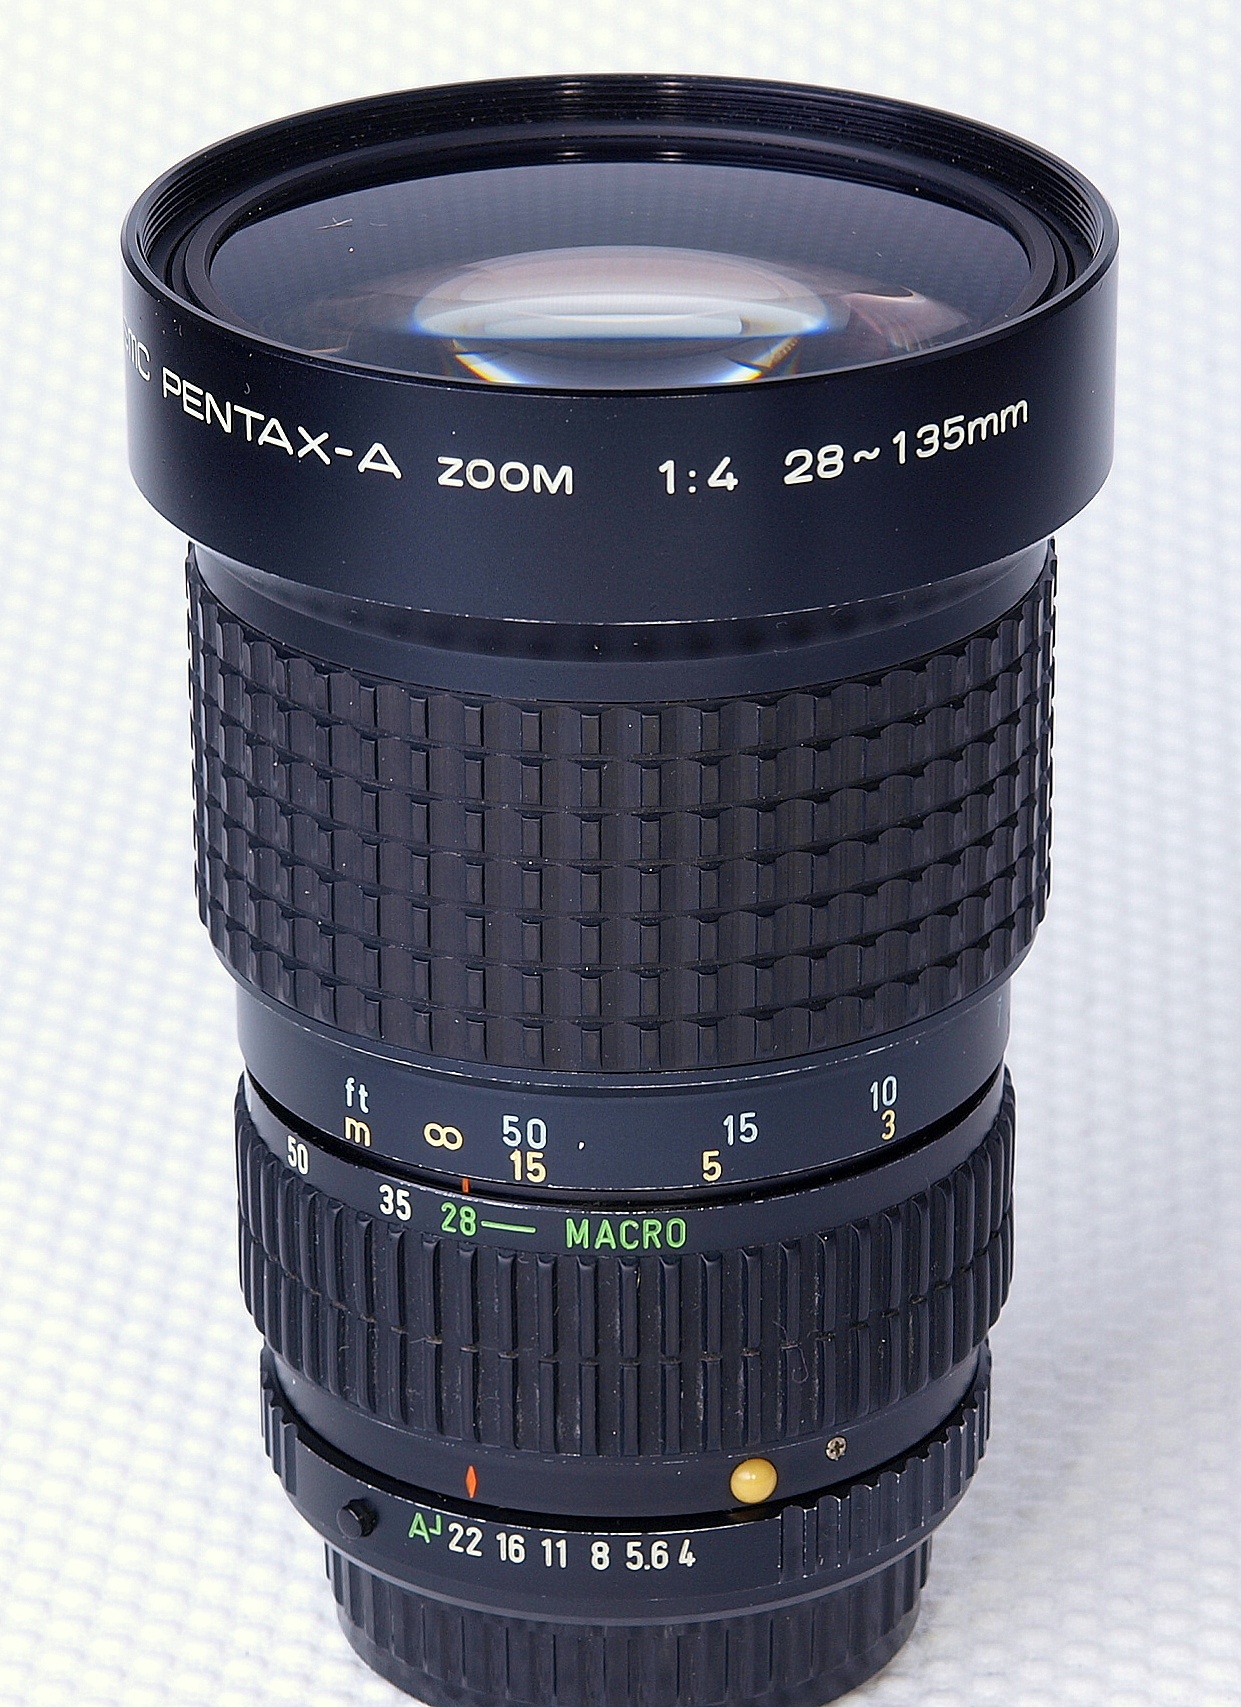 PentaxA 28135mm F4 SMC lens is a allpurpose zoomlens